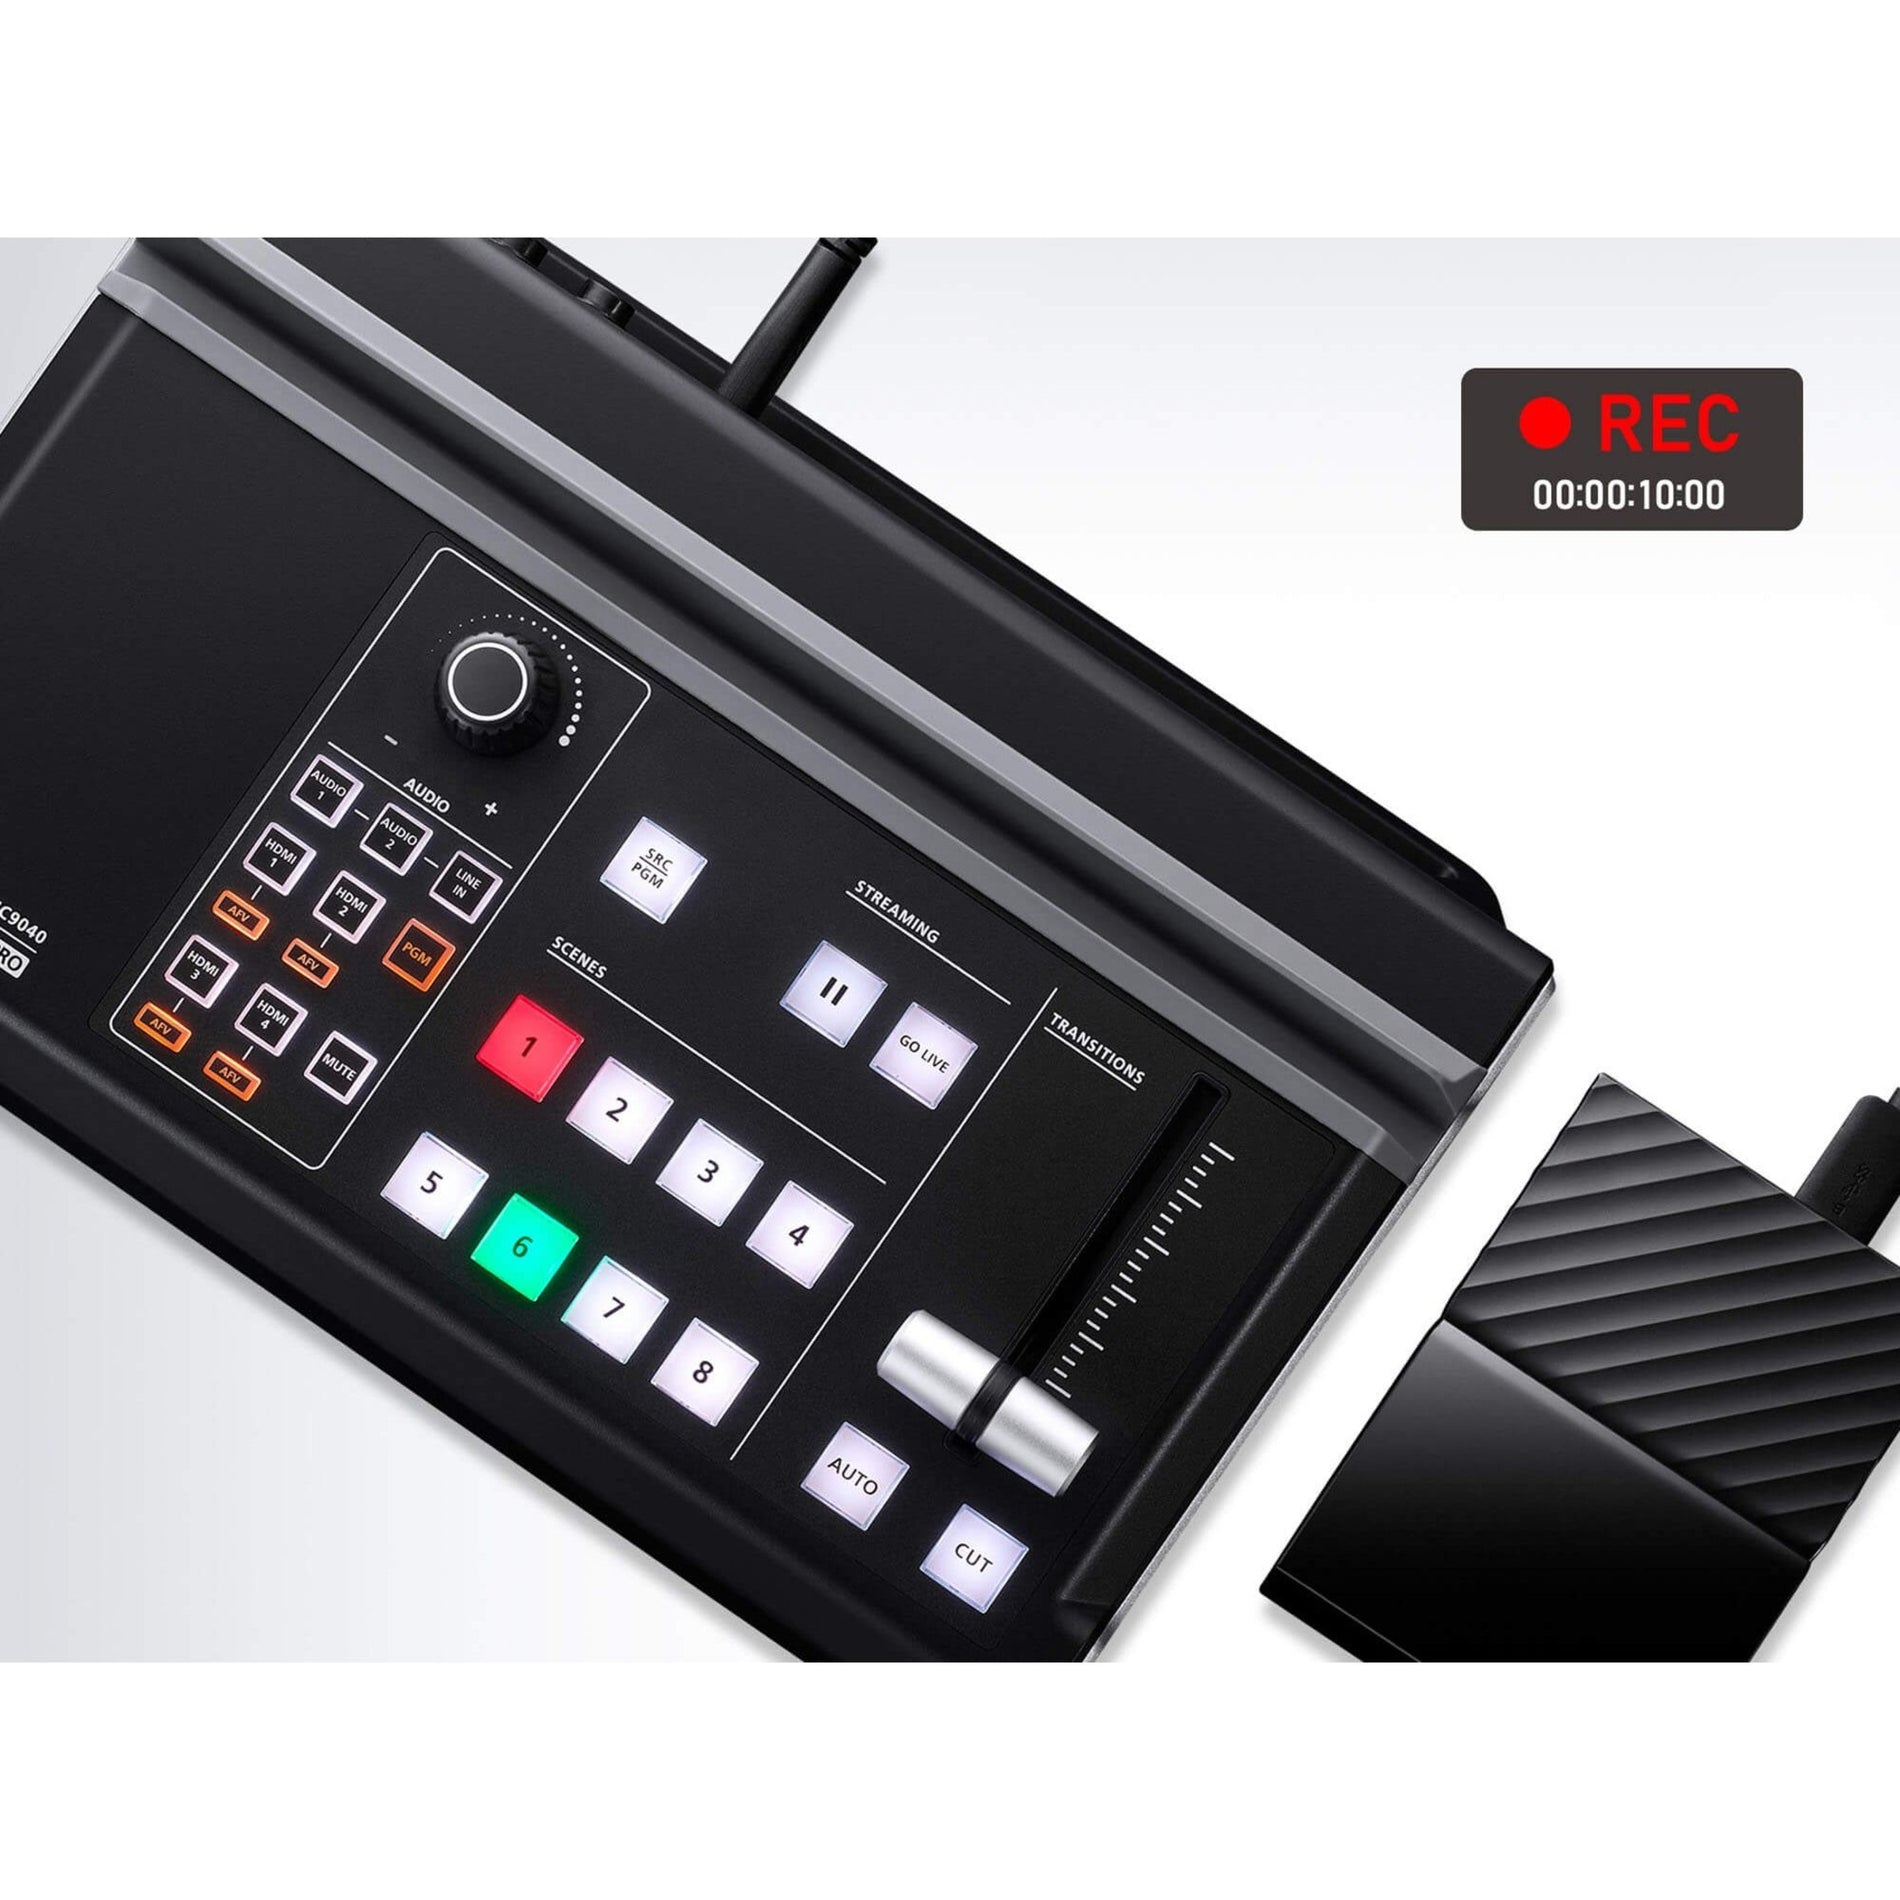 ATEN UC9040 StreamLIVE Pro All-in-one Multi-channel AV Mixer, Portable Video Mixer